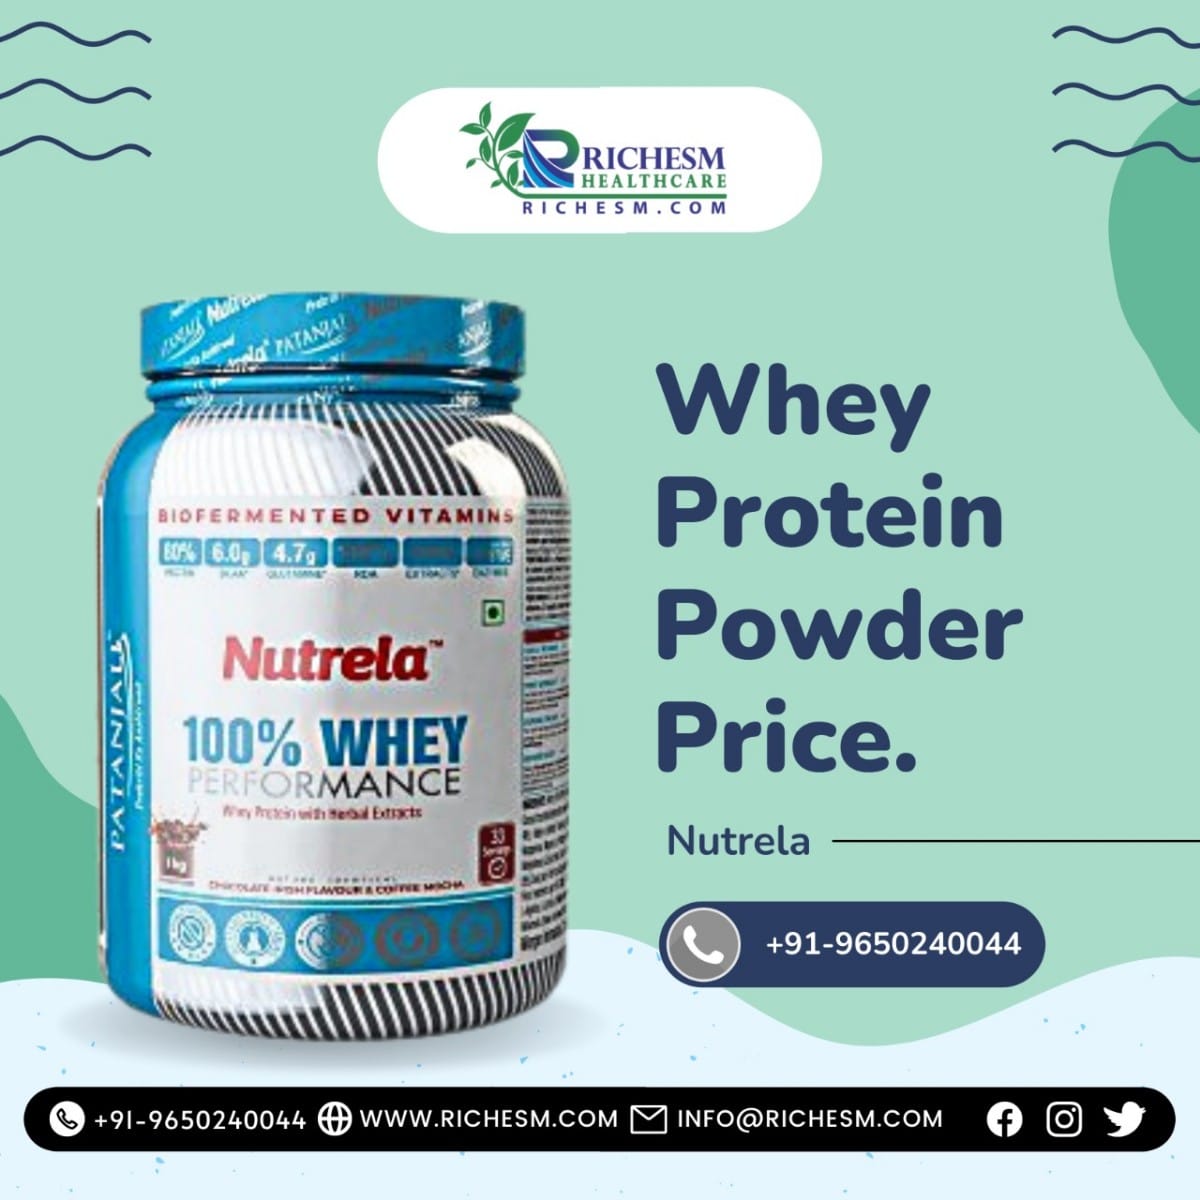 Whey Protein Powder Price Near Me Health and Nutrition Whey Protein Powder Price